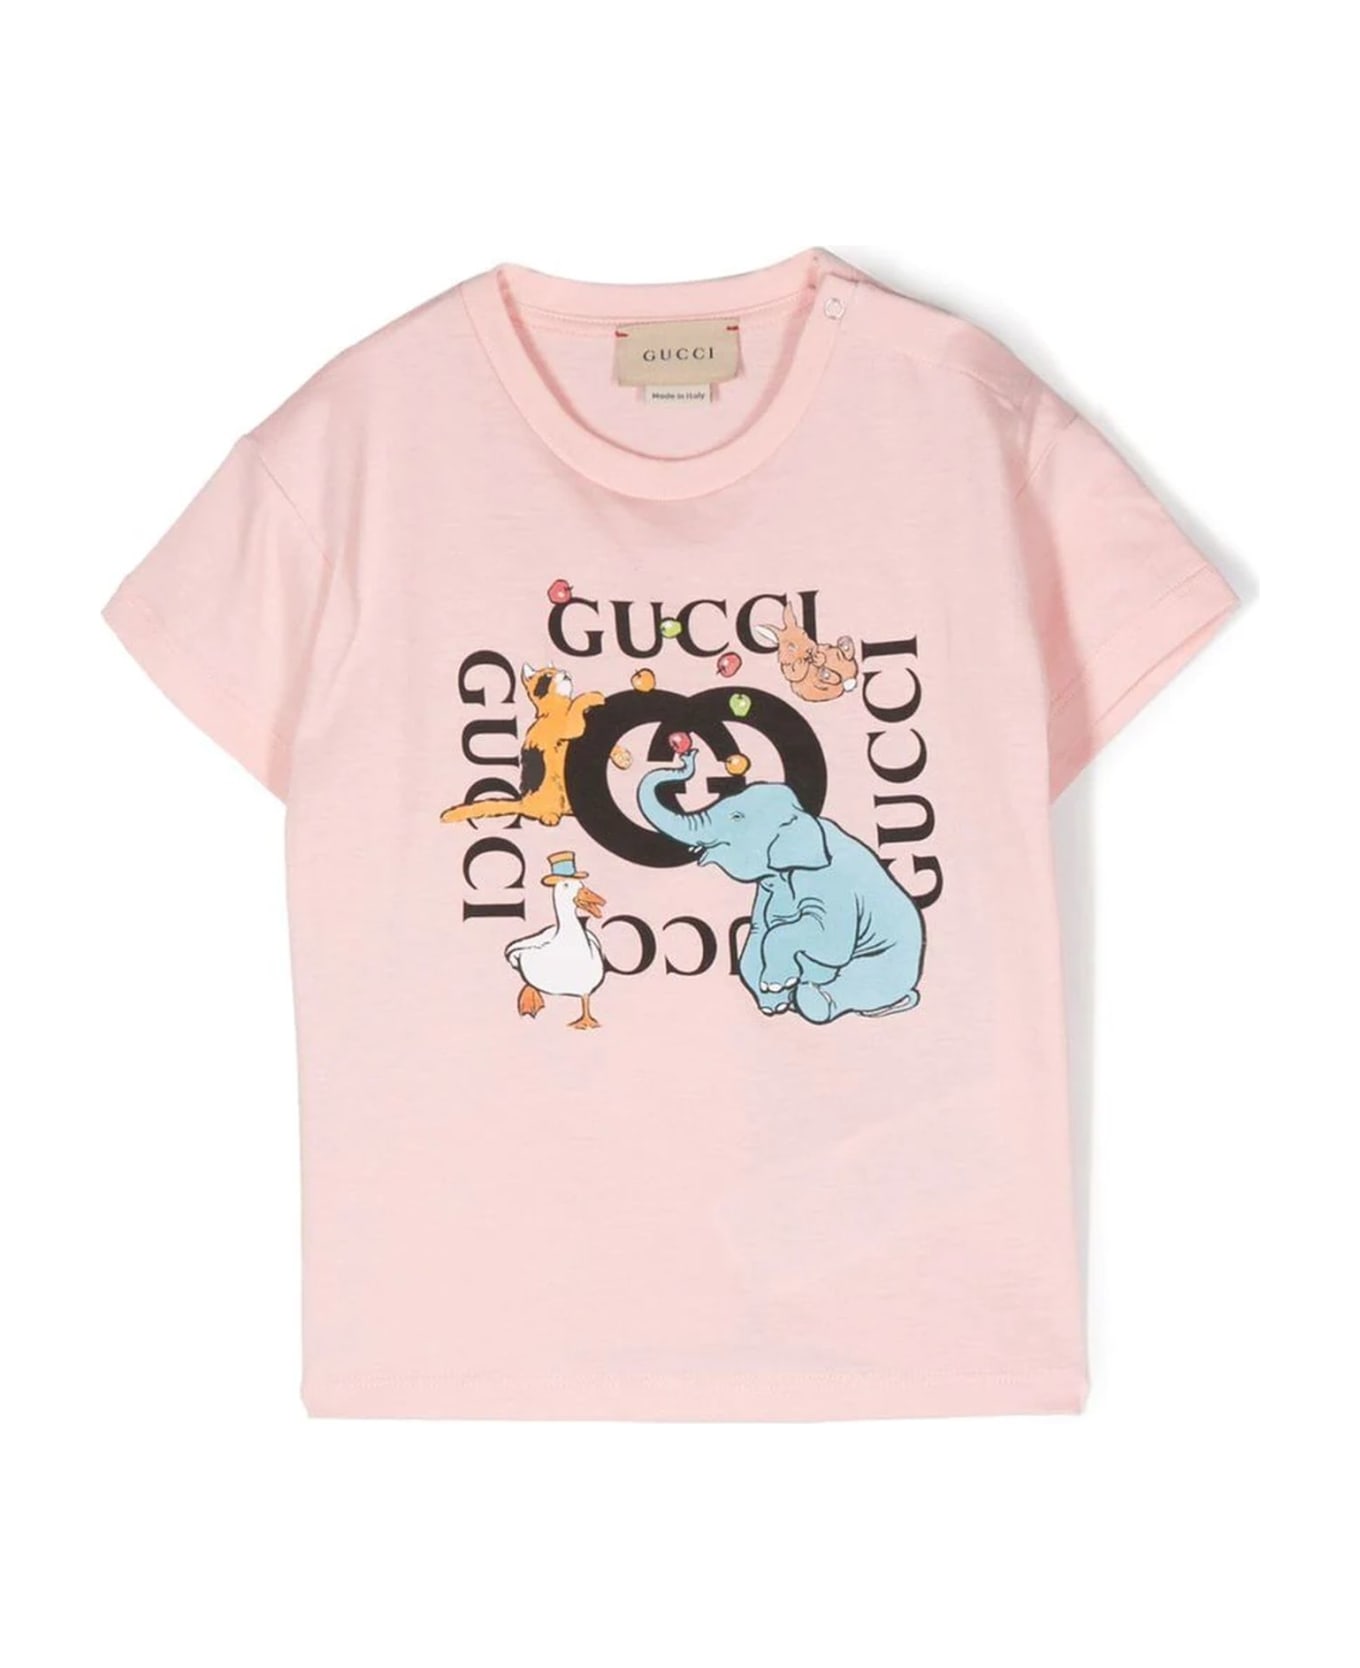 Gucci Pink Cotton Tshirt - Rosa